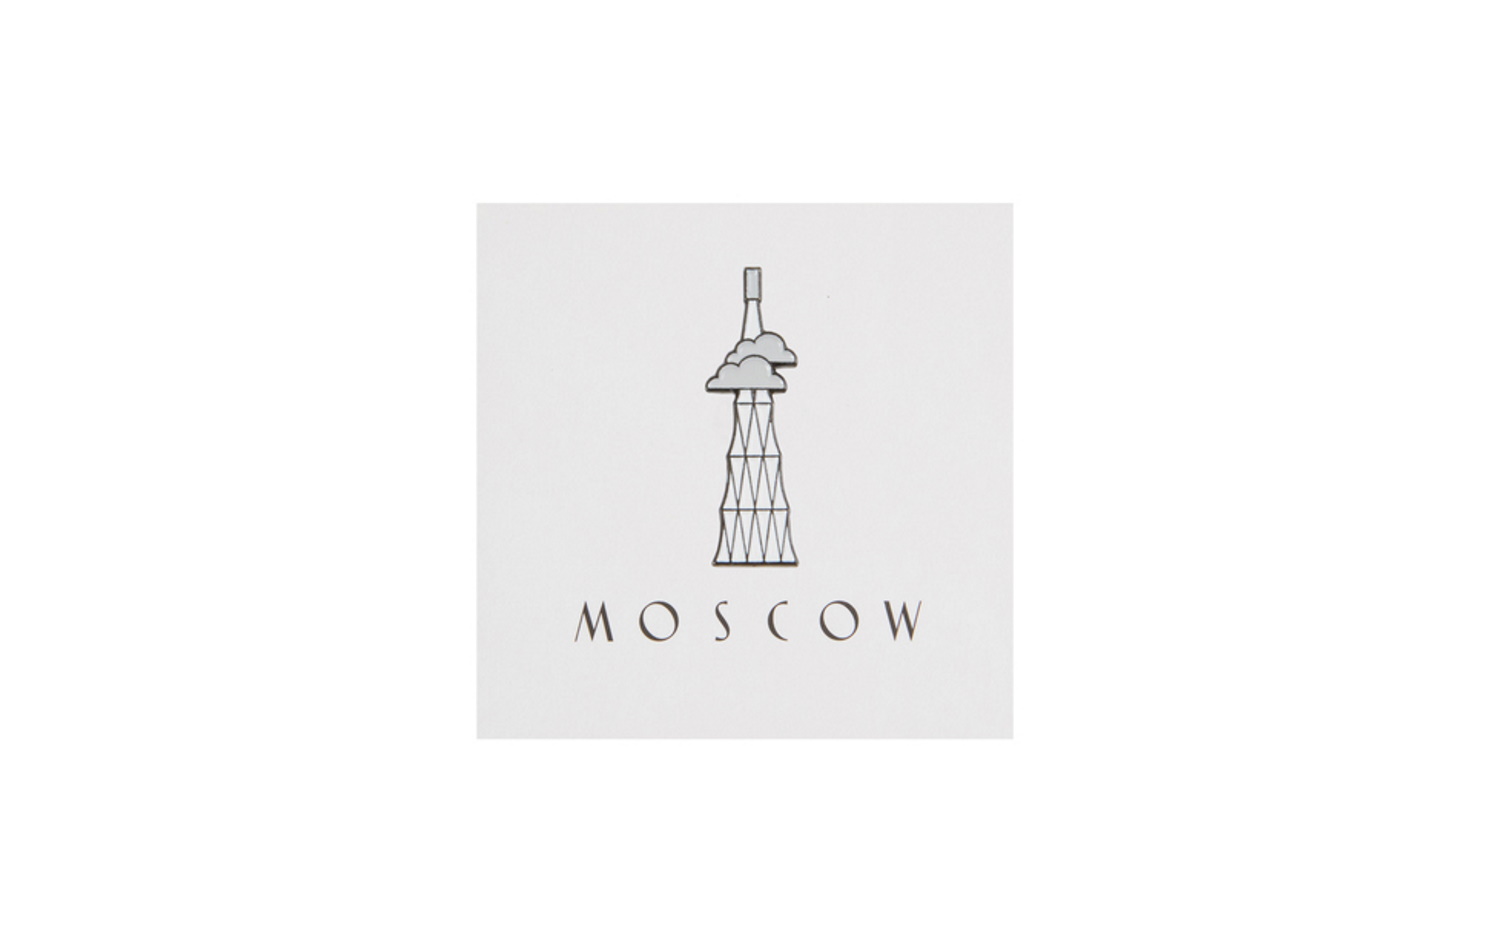 Значок Heart of Moscow — Шуховская башня